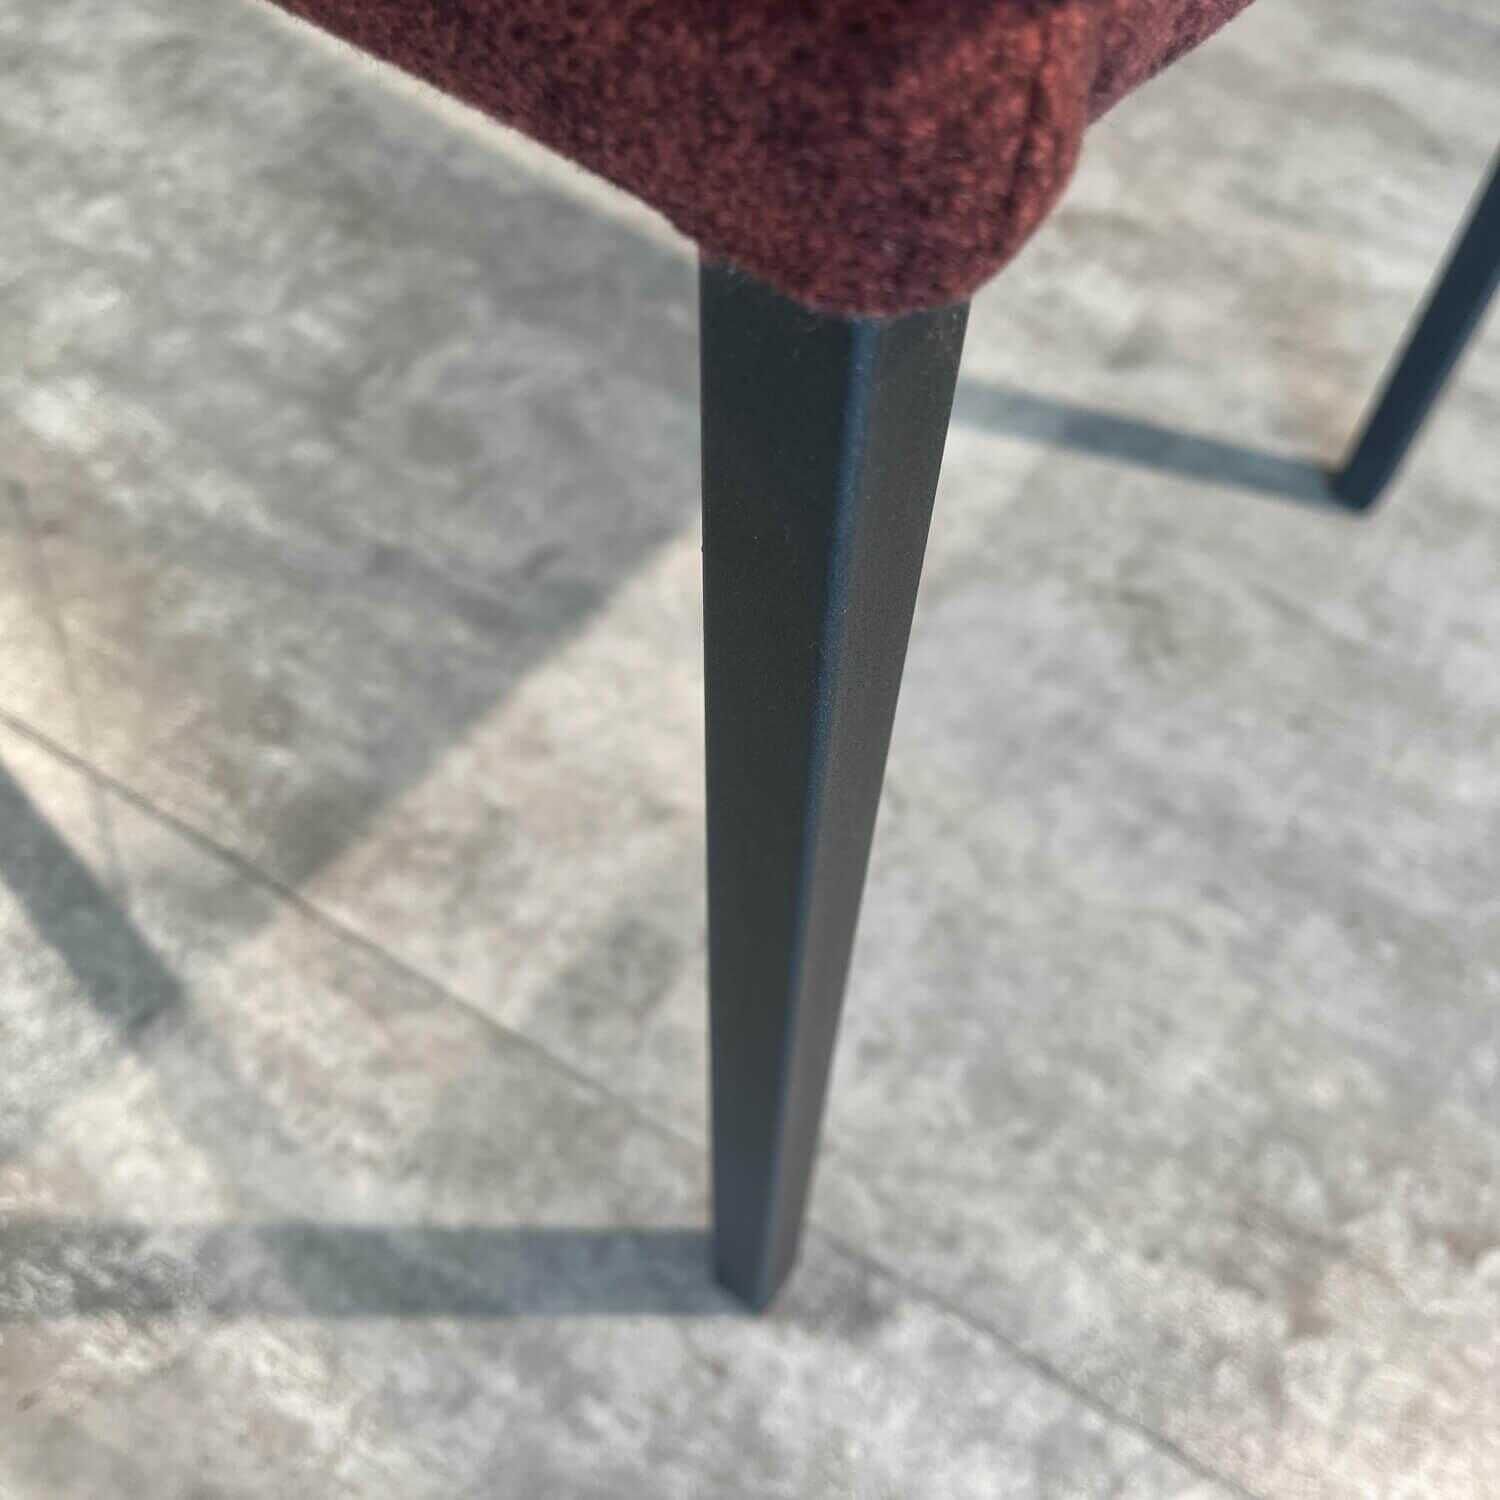 Saragossa 4-Fuß Stuhl 8226 Bezug Cecina Bordeaux Gestell Vierkant Metall schwarz Pulverbeschichtet